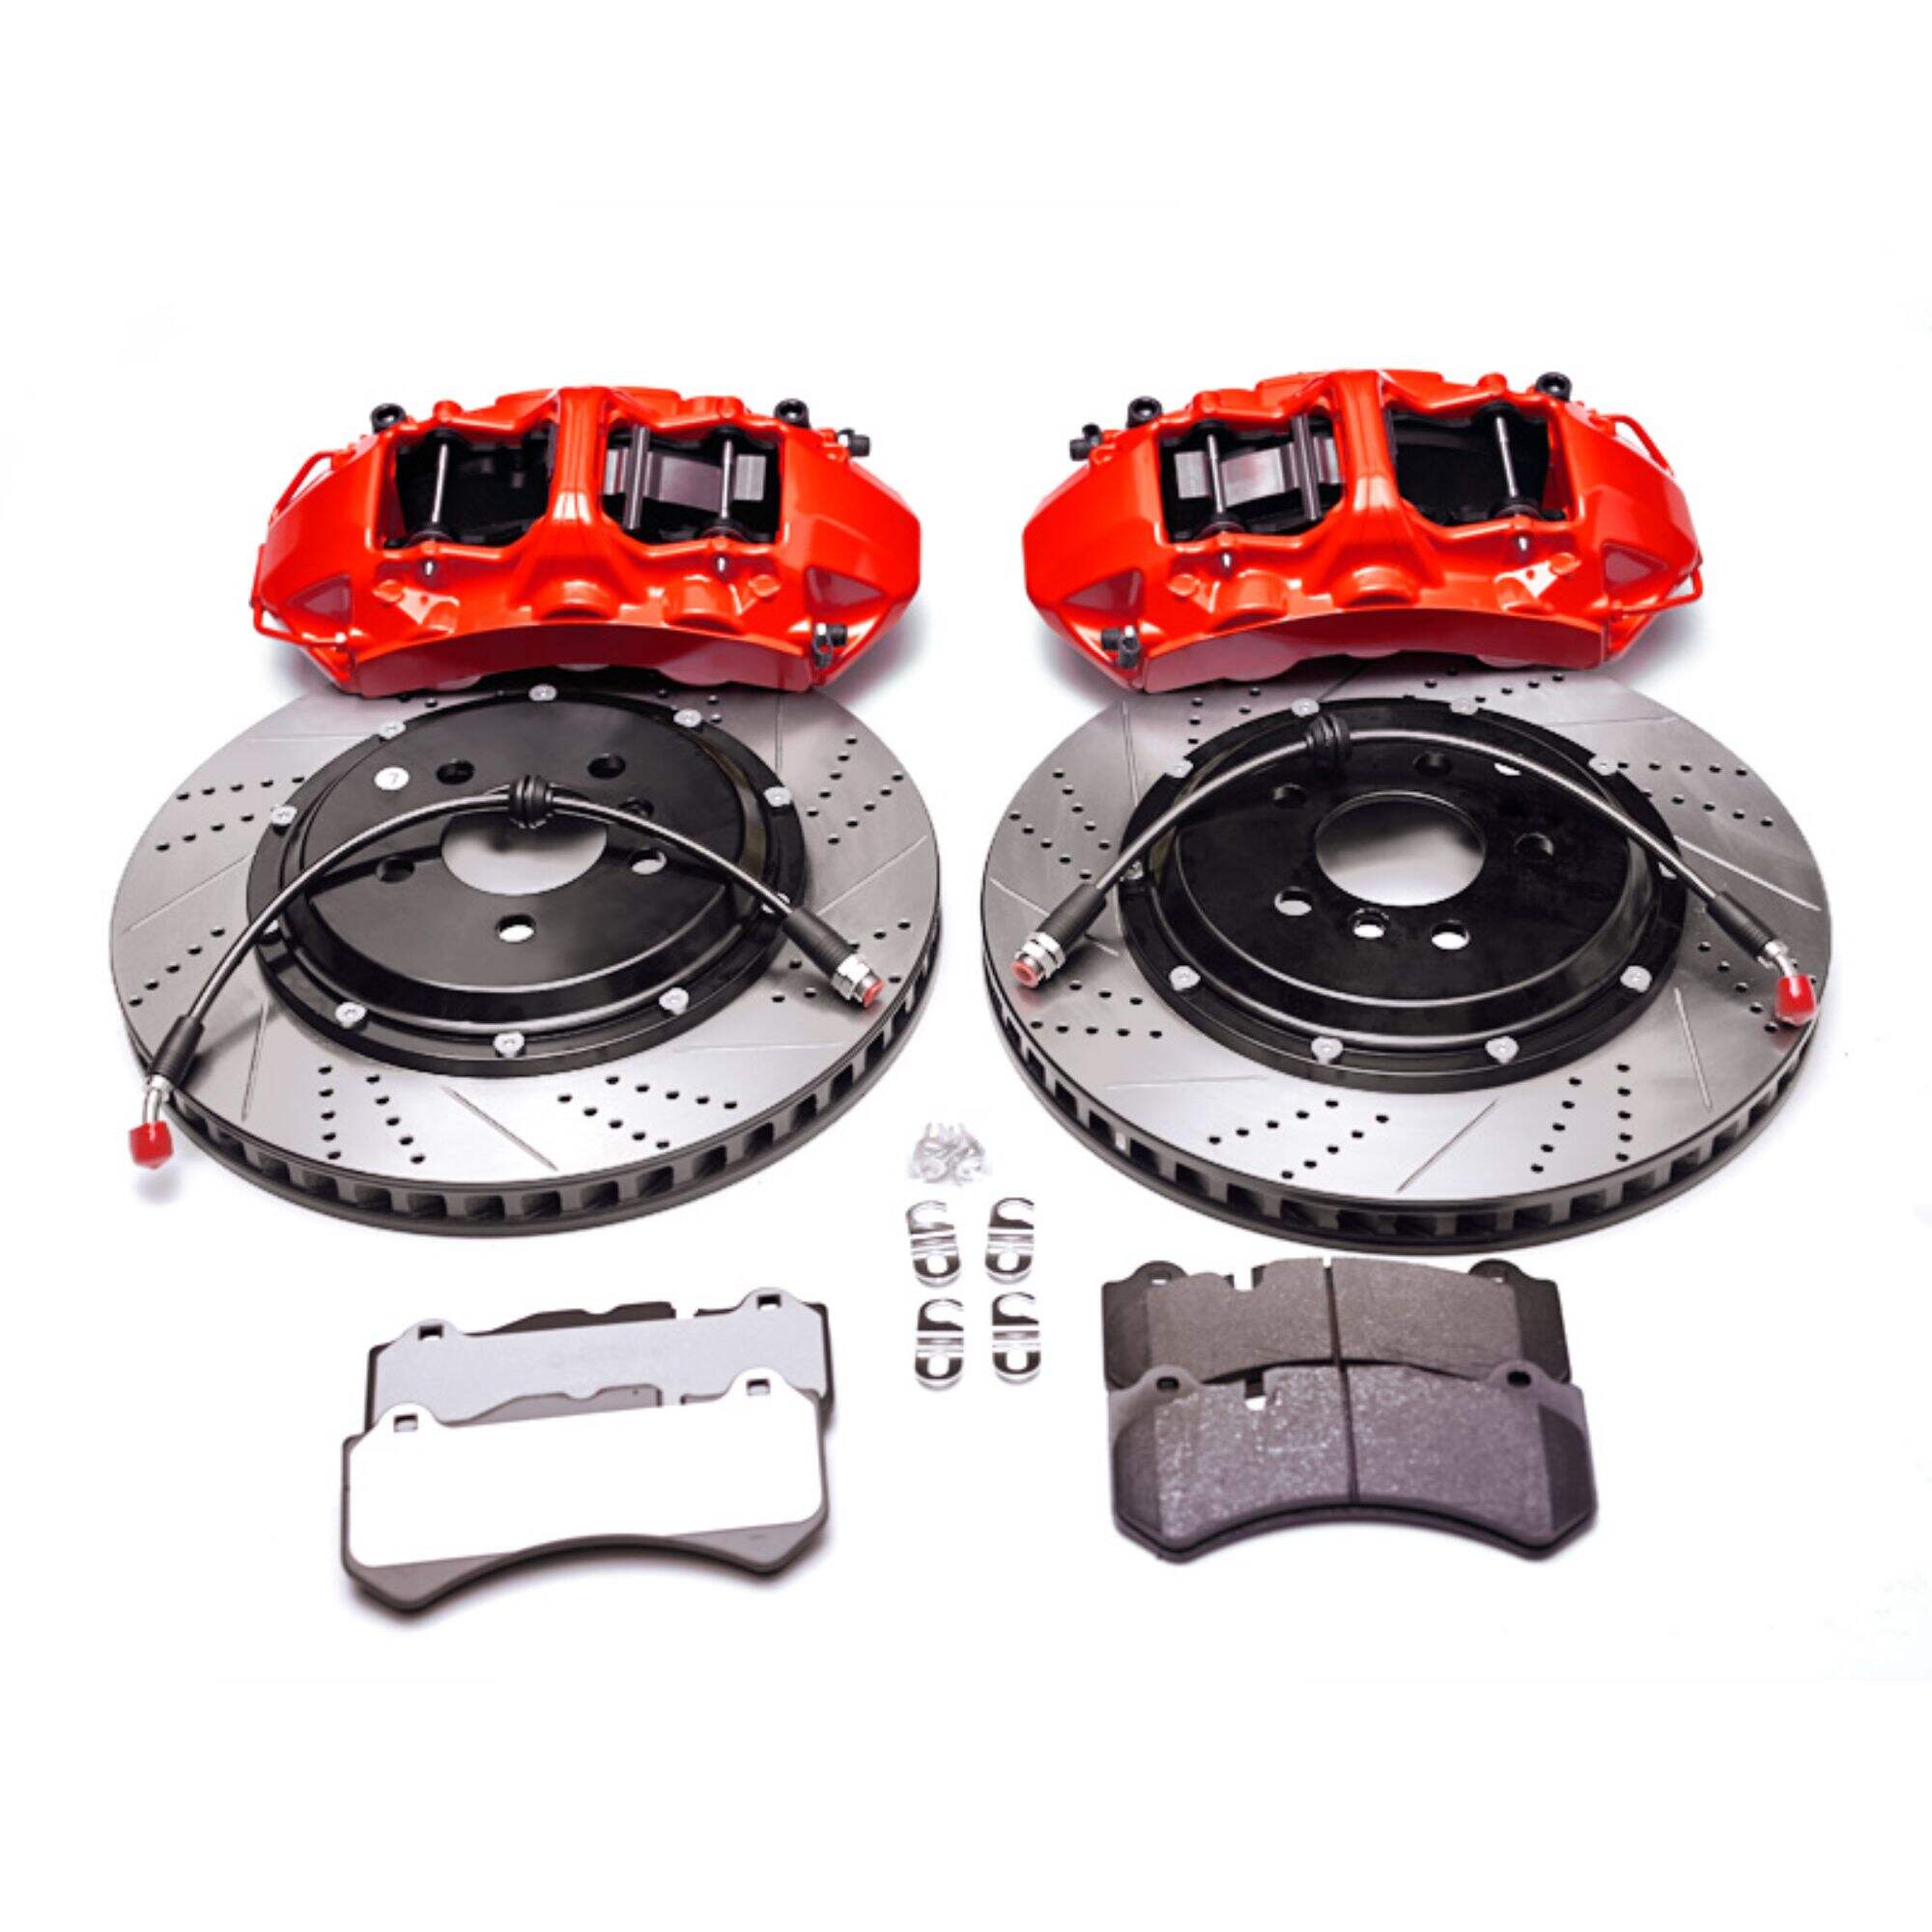 18 inches performance car brake upgrade wheels brake kit parts for subaru BRZ 2015 2019 2022